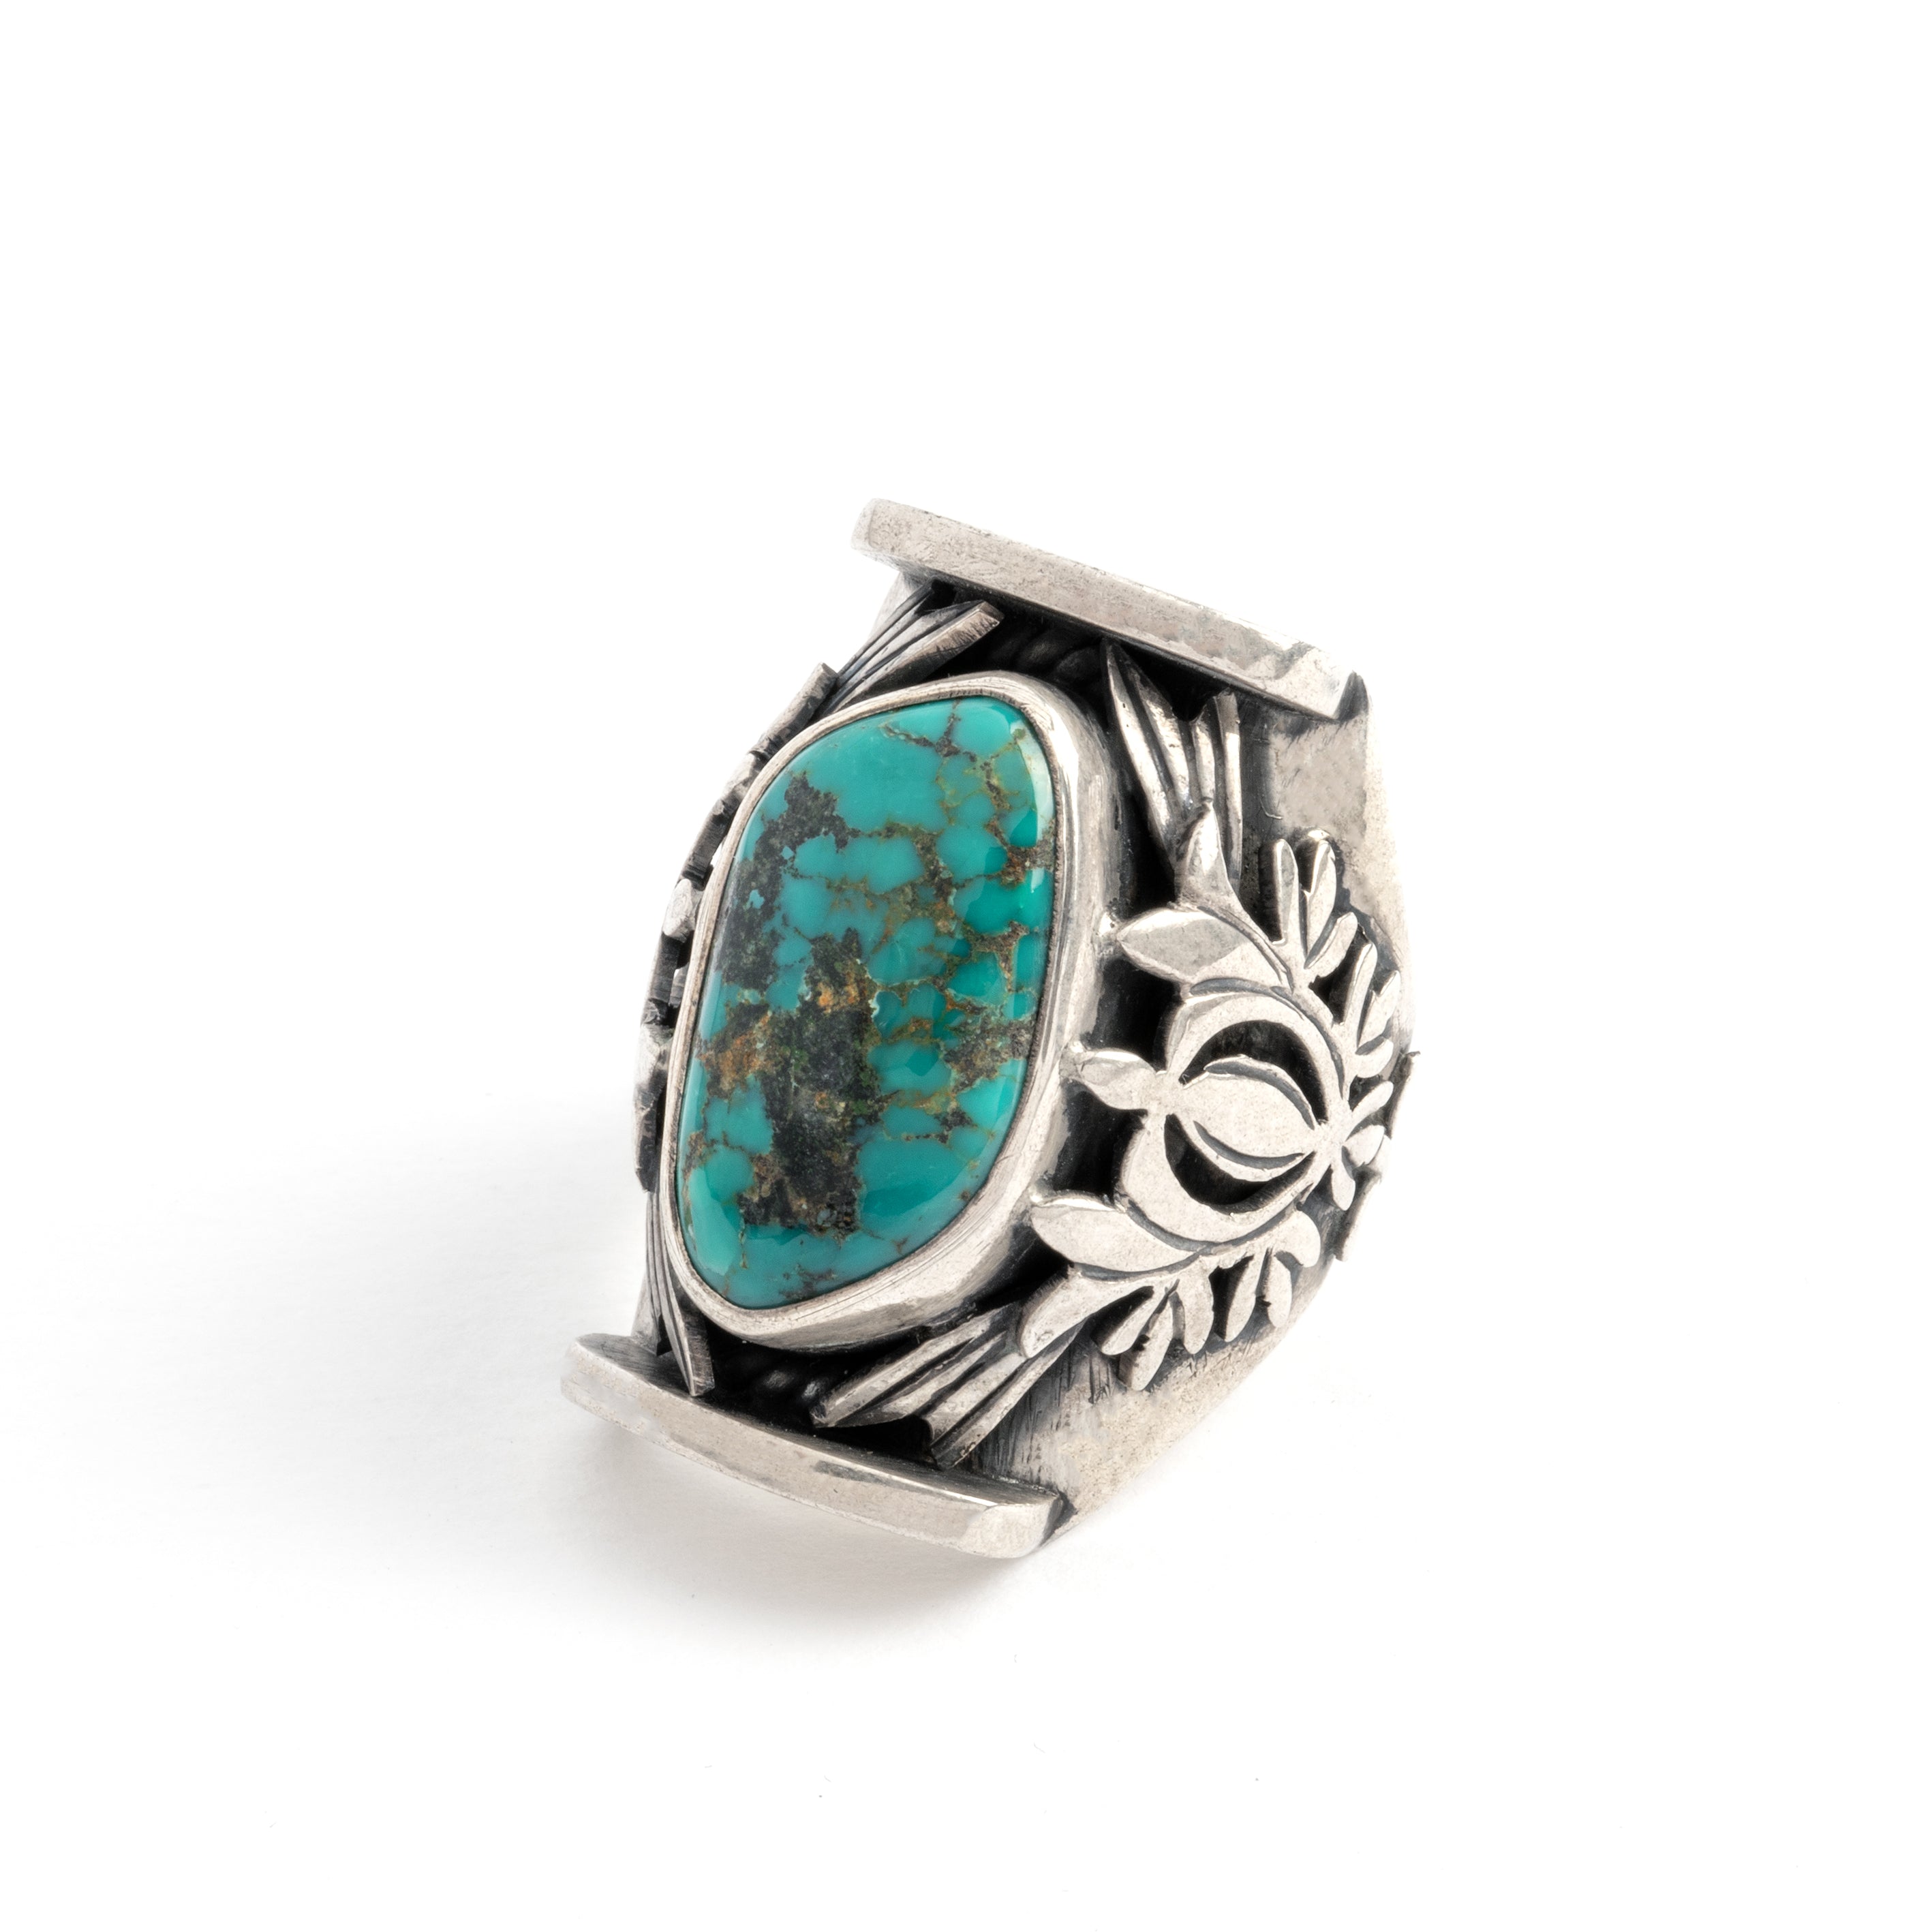 Hallmarked Saddle Ring with Tibetan Turquoise